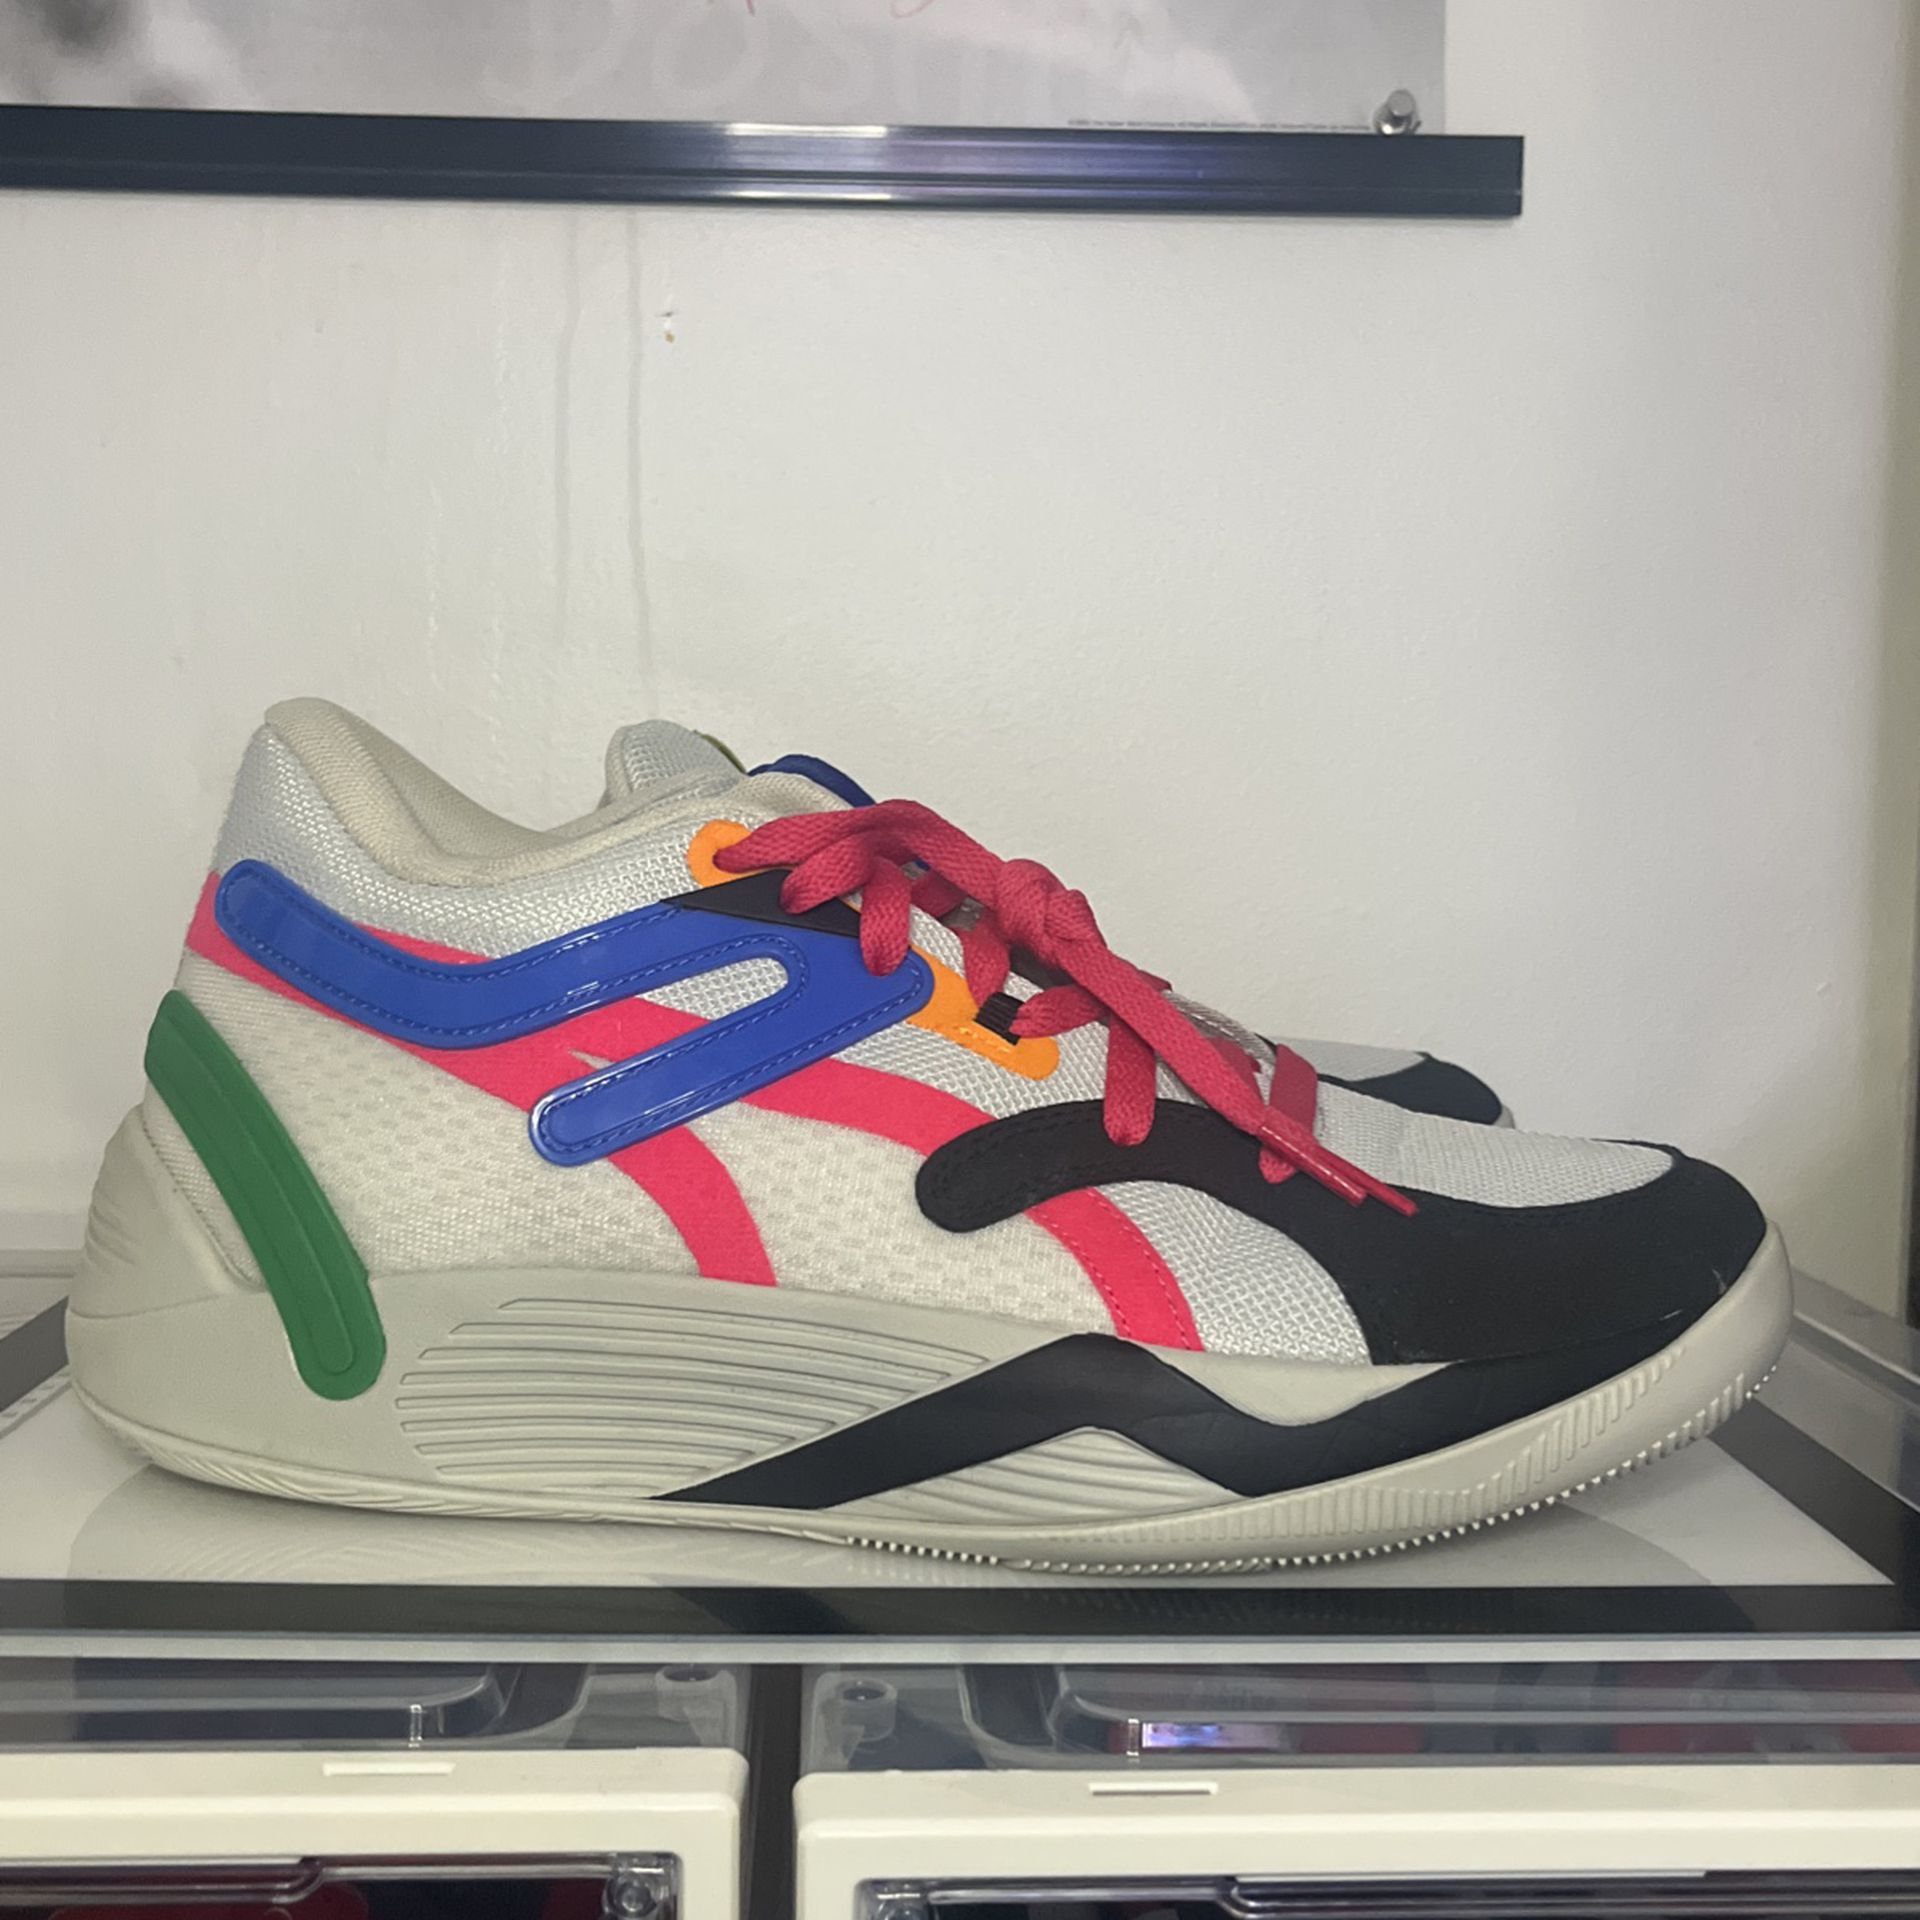 Puma basketball shoes